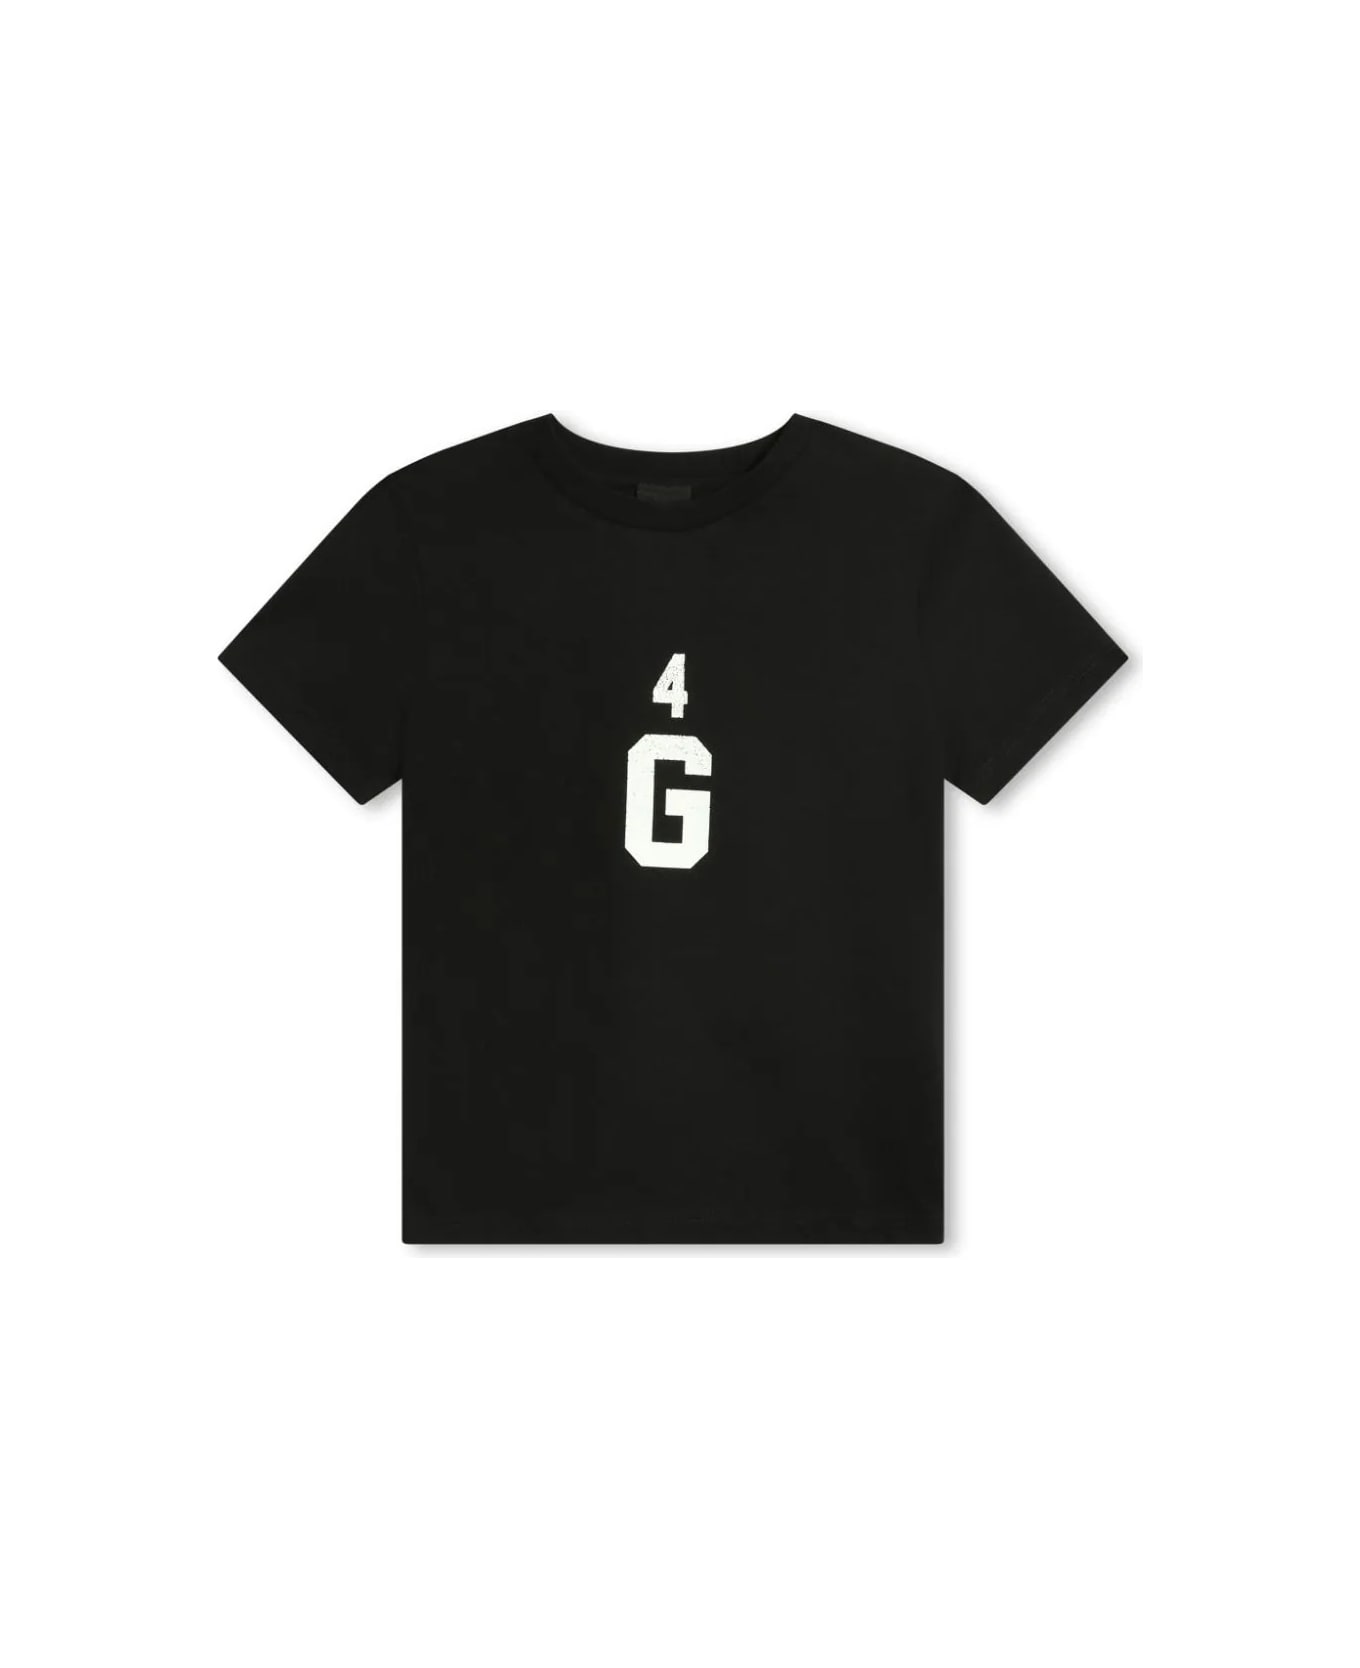 Givenchy Black T-shirt With Givenchy 4g Print - Black